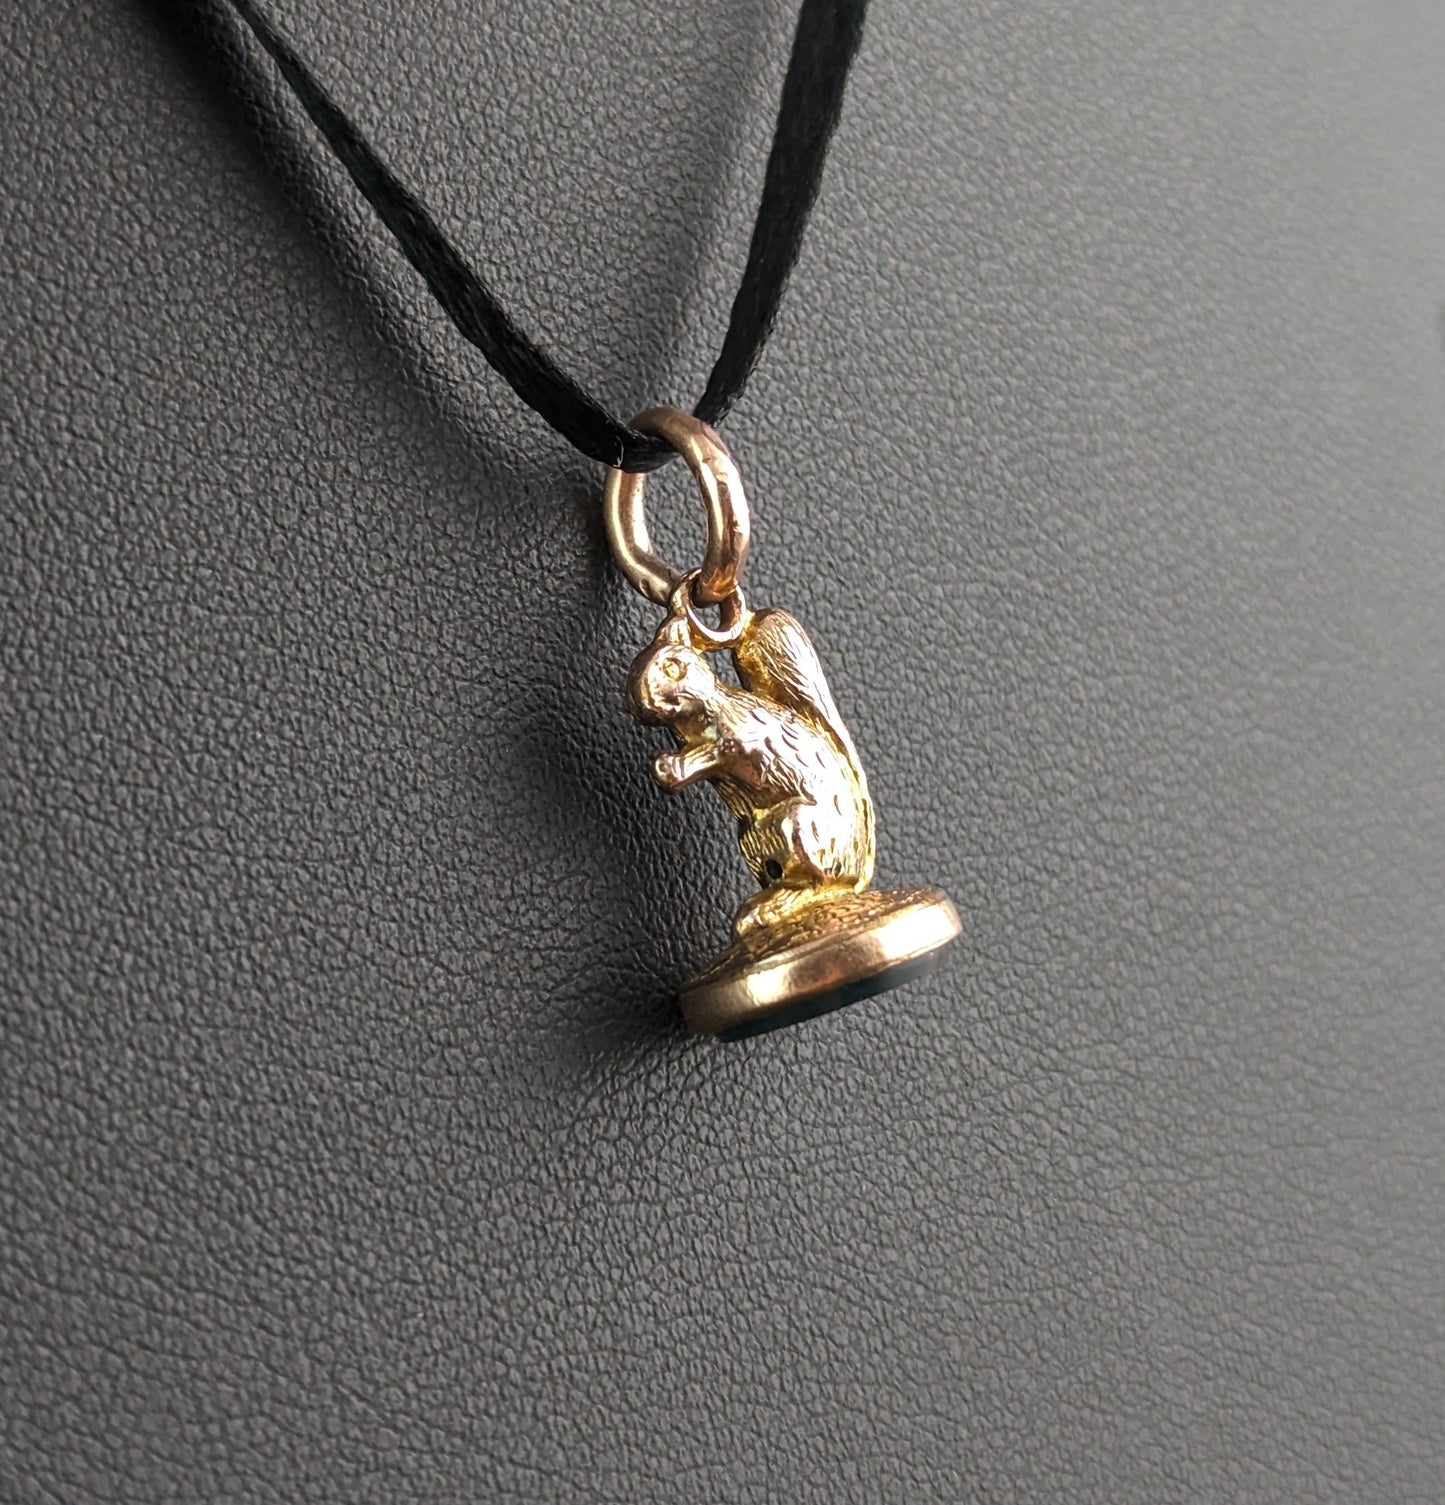 Antique 9ct gold squirrel seal fob pendant, charm